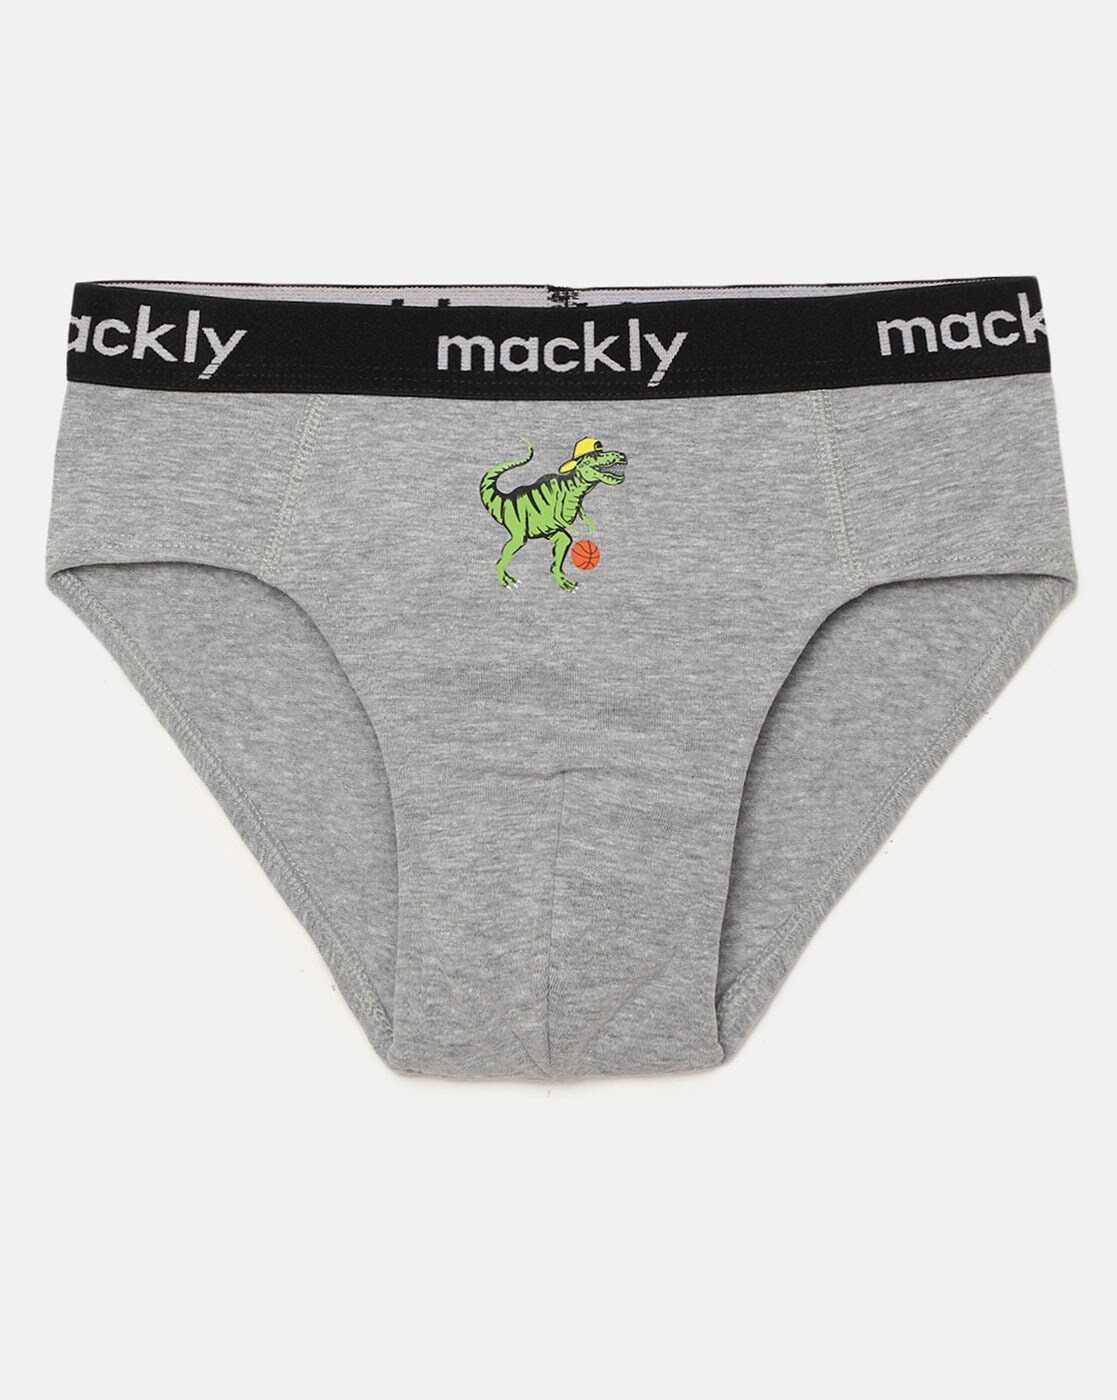 Buy Mackly Multi-Color Printed Girls Briefs (Pack of 3) online